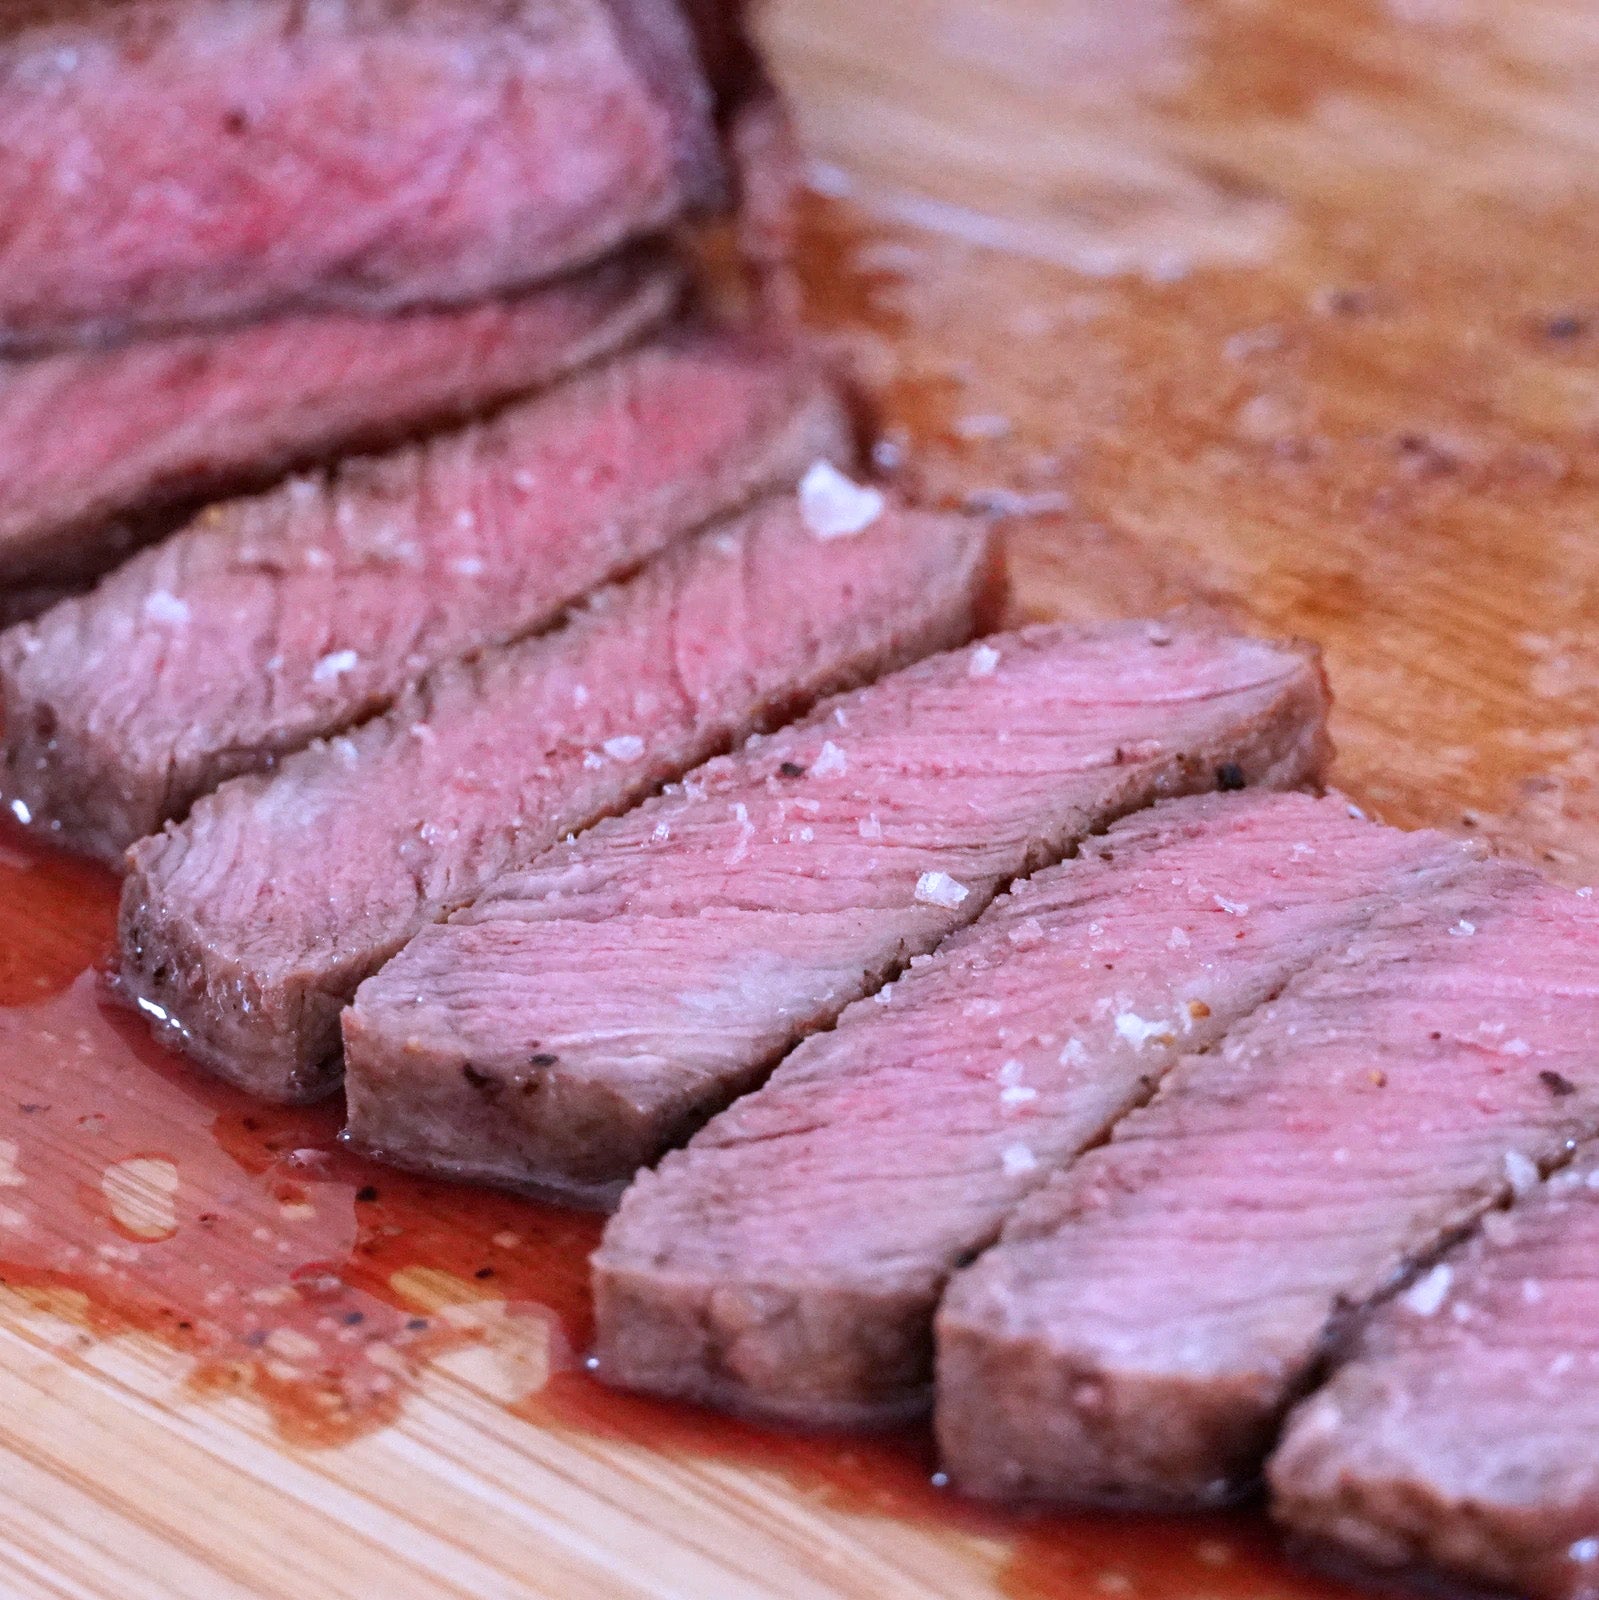 Premium Grain-Fed Beef MB5+ Striploin Steak from Australia 300g 10-Pack (3kg) - Horizon Farms